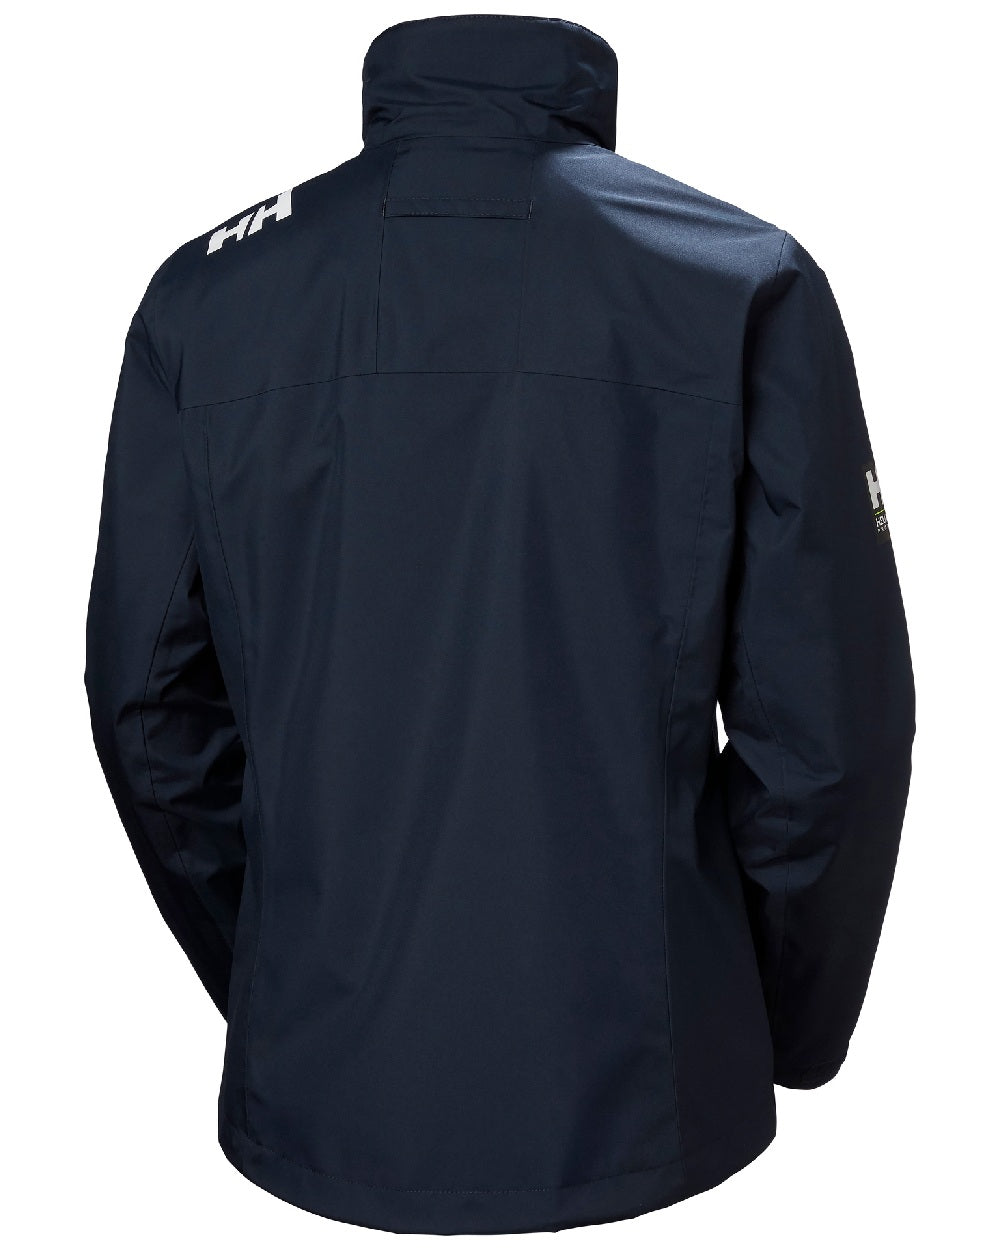 Navy coloured Helly Hansen Womens Crew Midlayer Sailing Jacket 2.0 on white background 